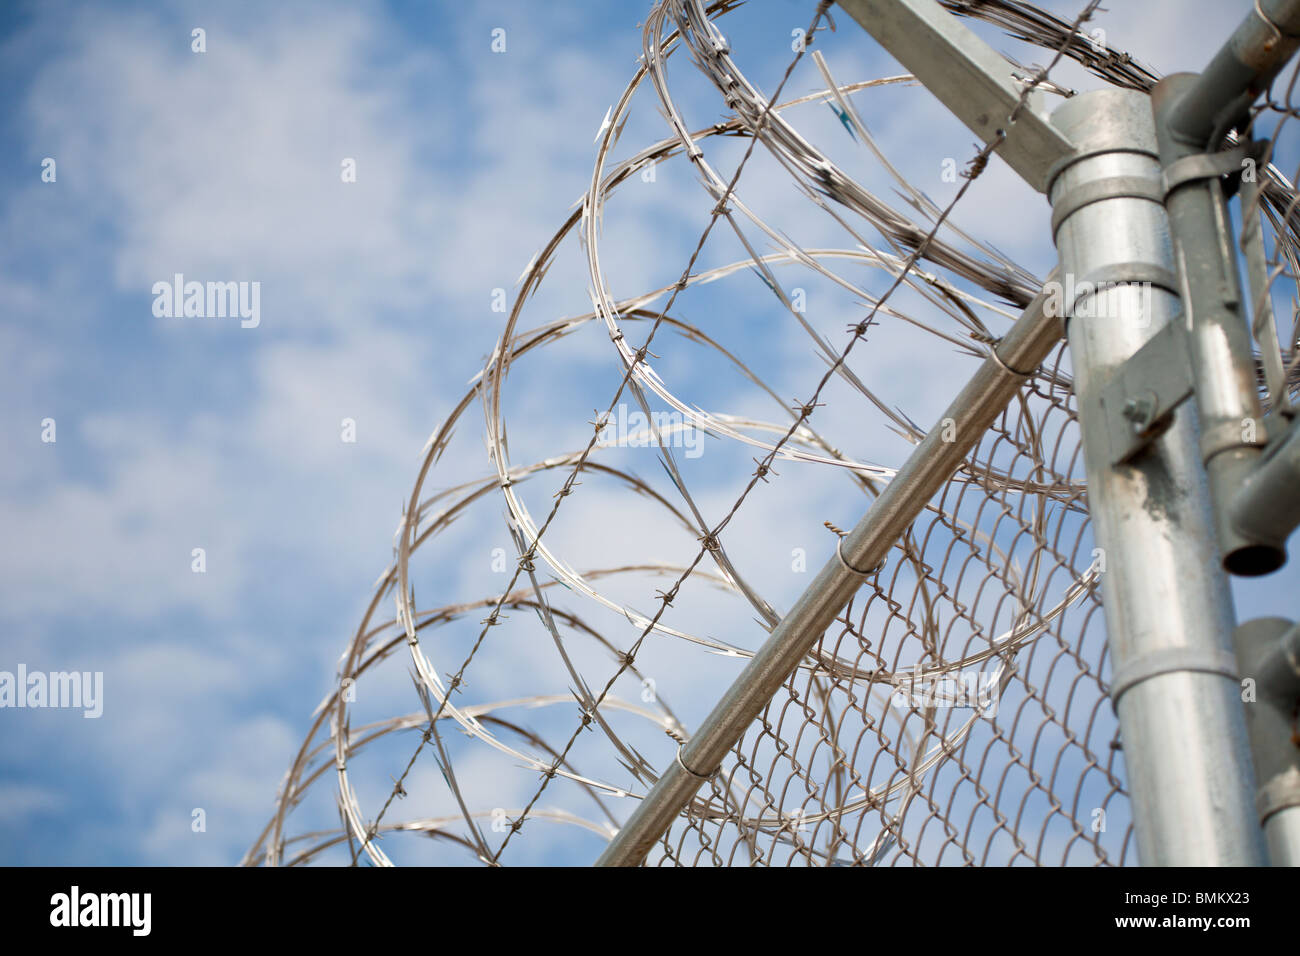 Florida - Februar 2009 - Edelstahl Stacheldraht Spiralen über Maschendrahtzaun an Justizvollzugsanstalt in Zentral-Florida Stockfoto